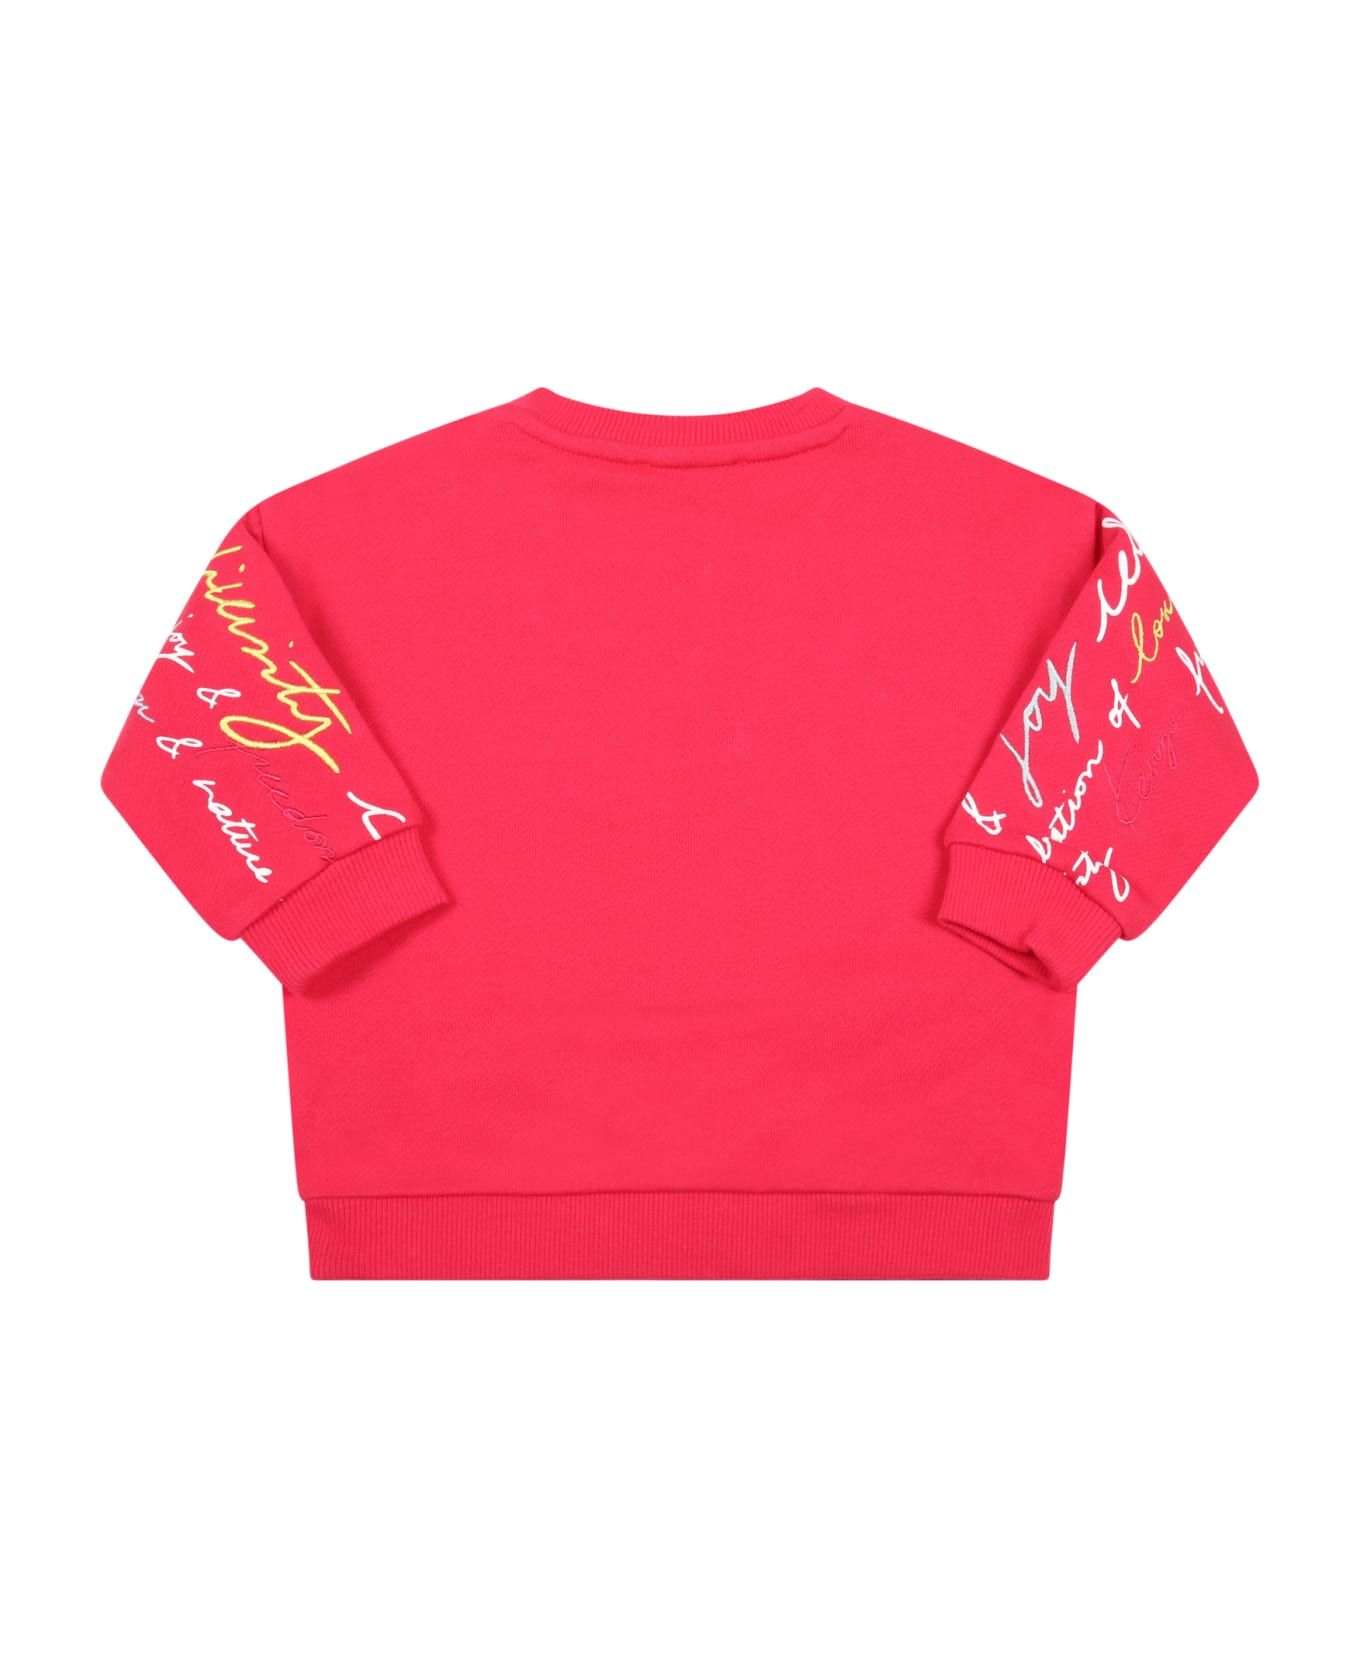 Kenzo Kids Fuchsia Sweatshirt For Baby Girl With Tiger - Red